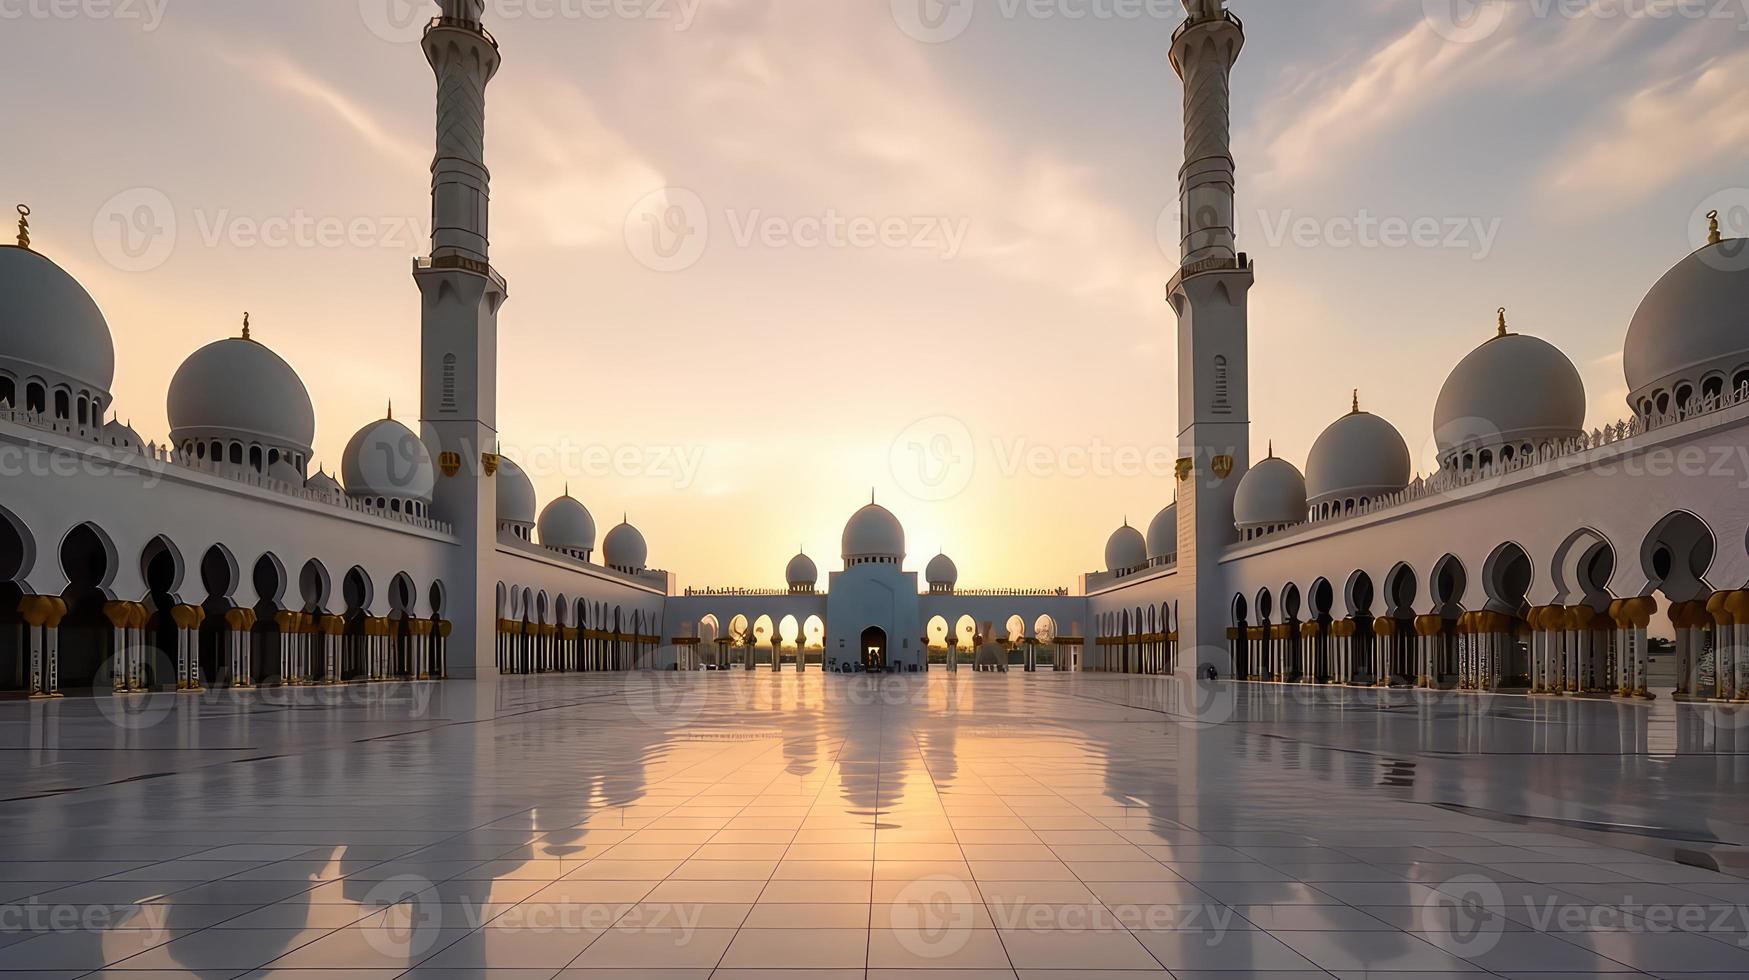 abu dhabi, vae, sjeik zayed groots moskee in de abu dhabi, Verenigde Arabisch emiraten Aan een zonsondergang visie achtergrond. foto